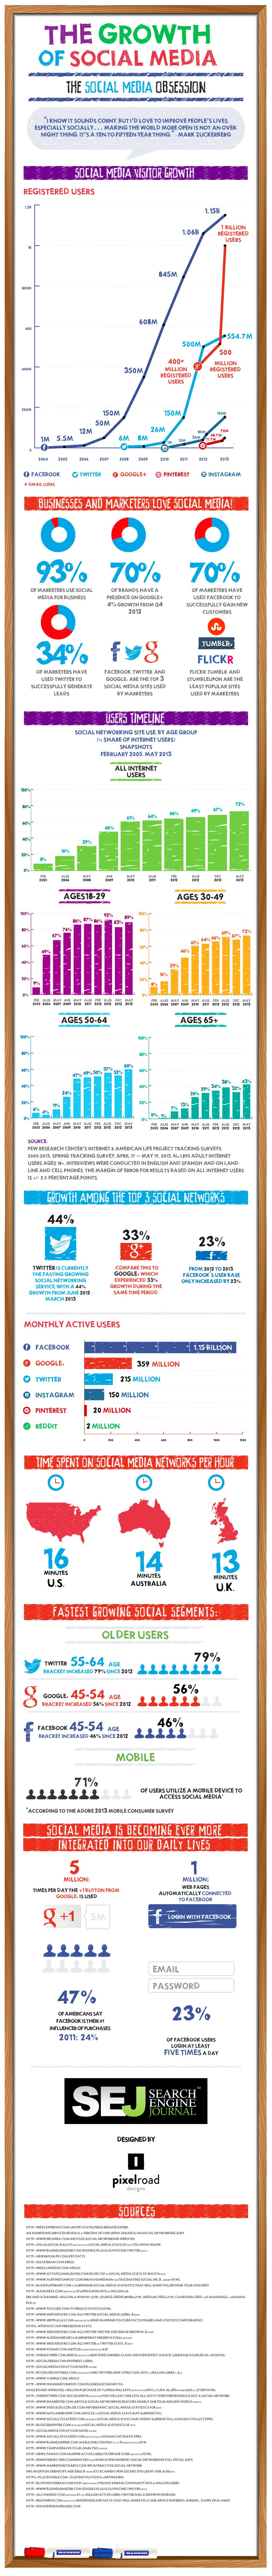 Social Media Growth 2014